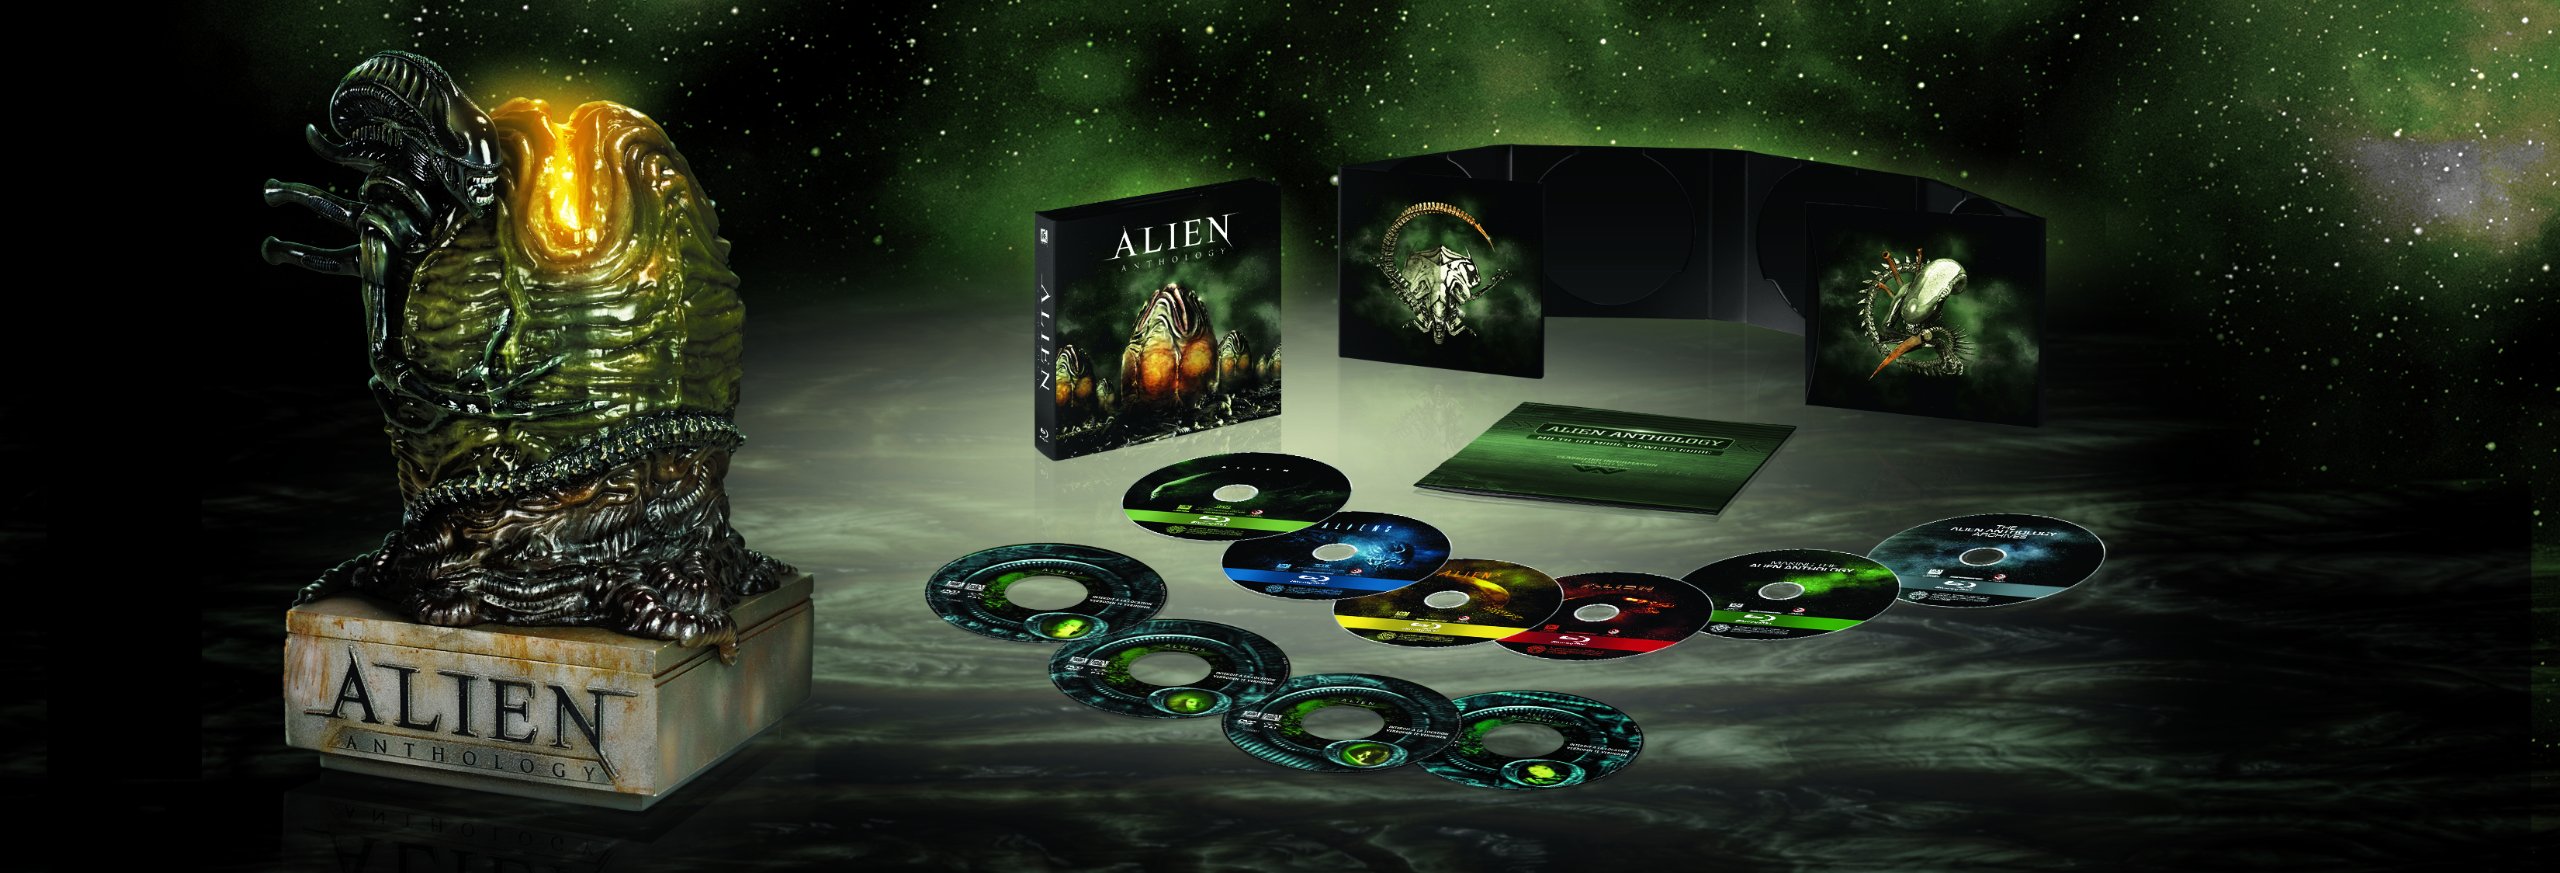 Alien Anthology (2011 Blu-Ray Set) - AvPGalaxy